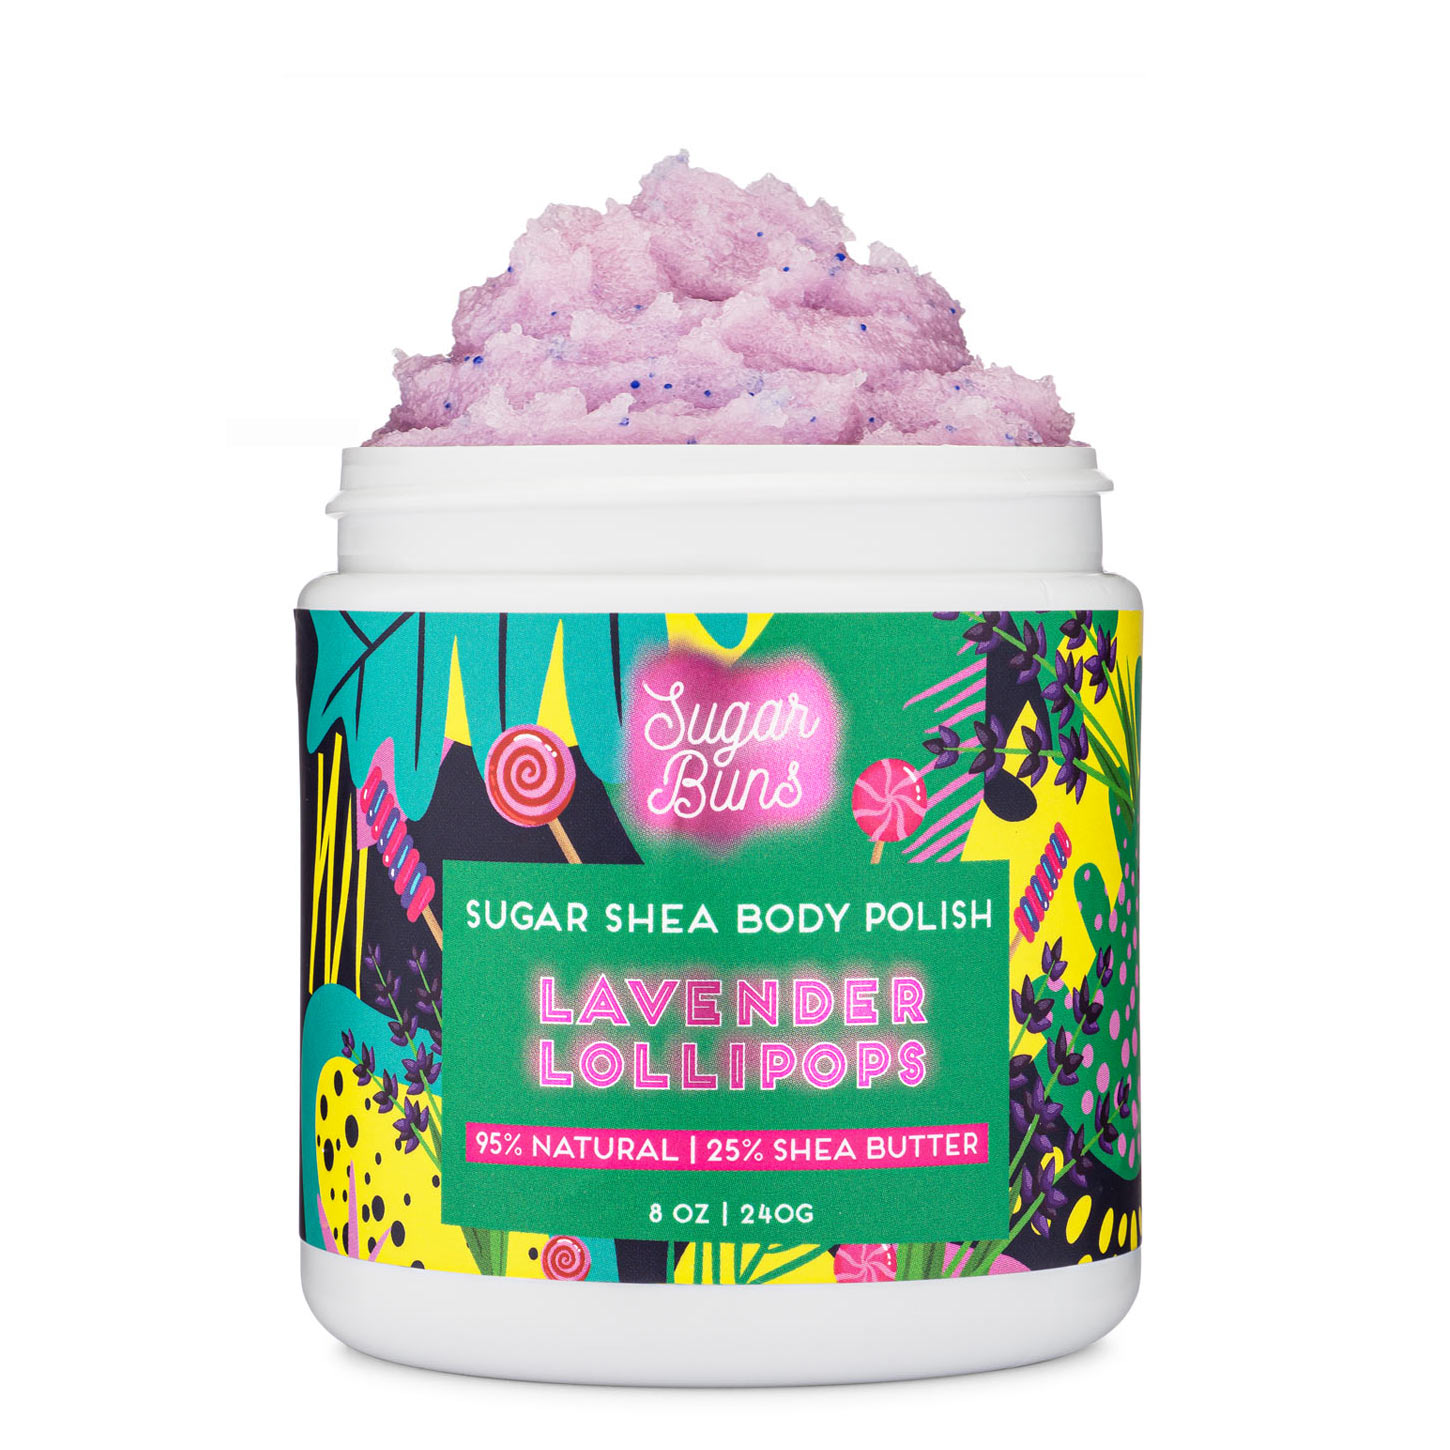 Sugar Shea Body Polish - Lavender Lollipop Sugar Buns Image